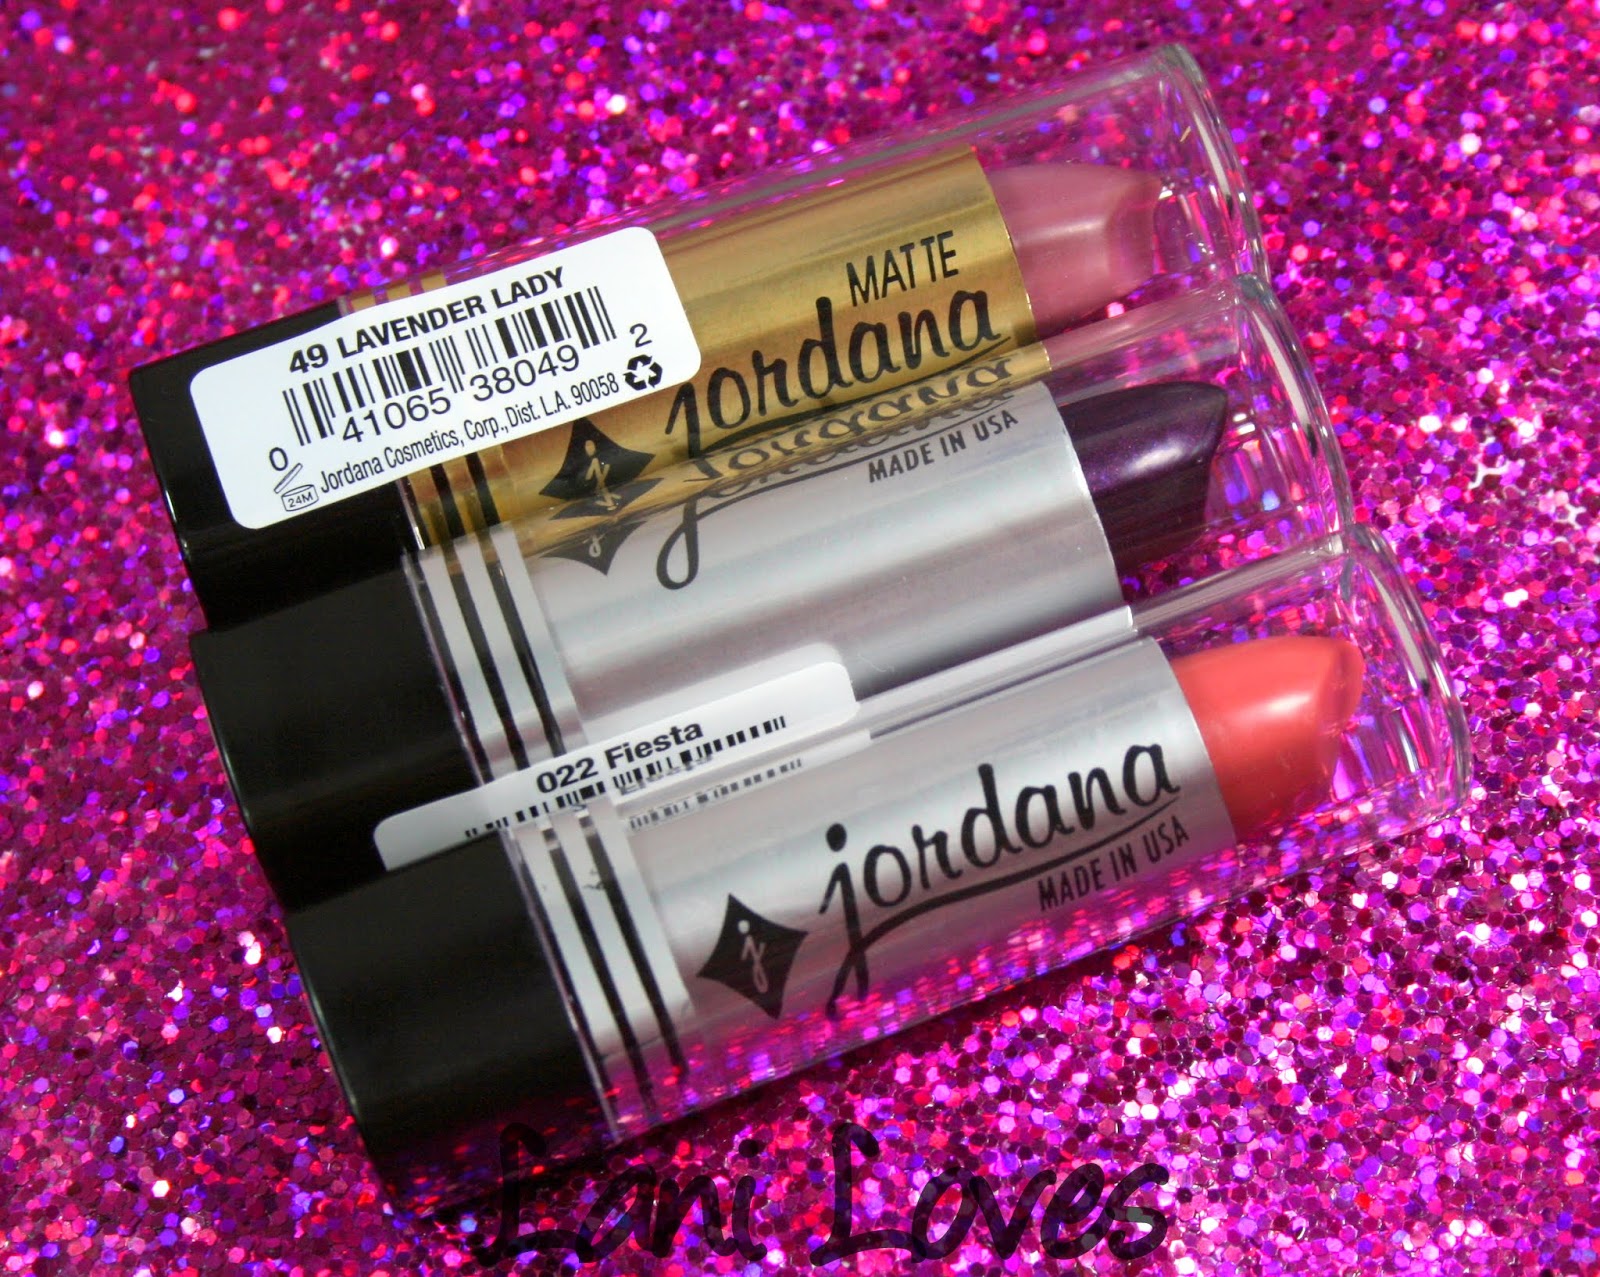 Jordana Lipsticks - Matte Lavender Lady, Fiesta and Pink Lemonade Swatches & Review